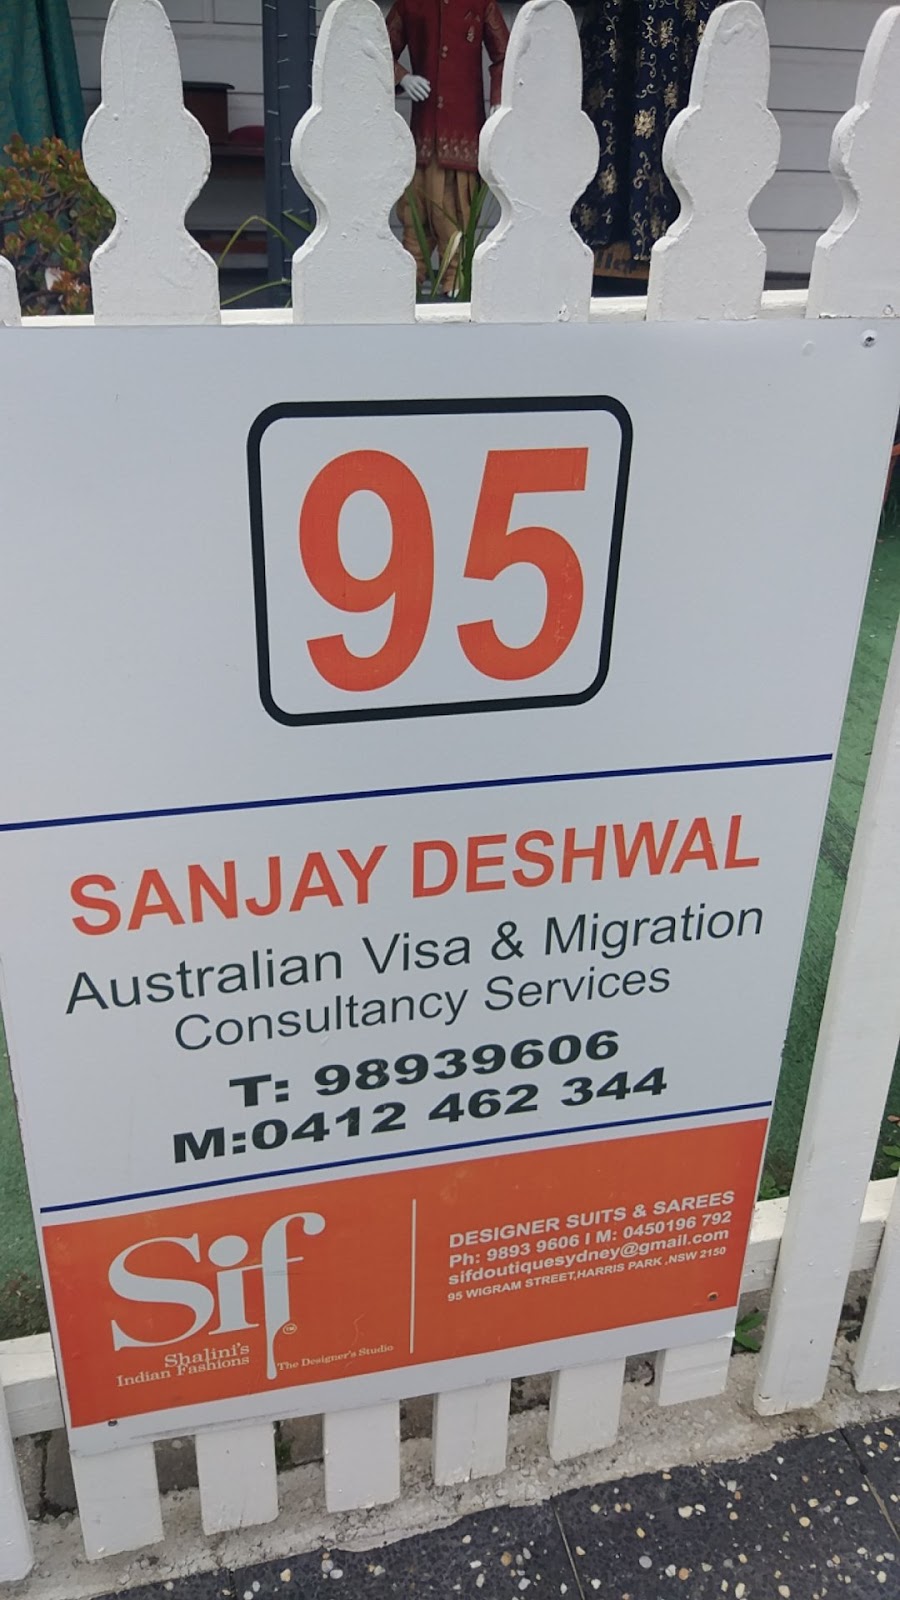 Australian Visa & Migration Consultancy Services | 95 Wigram St, Harris Park NSW 2150, Australia | Phone: (02) 9893 9606